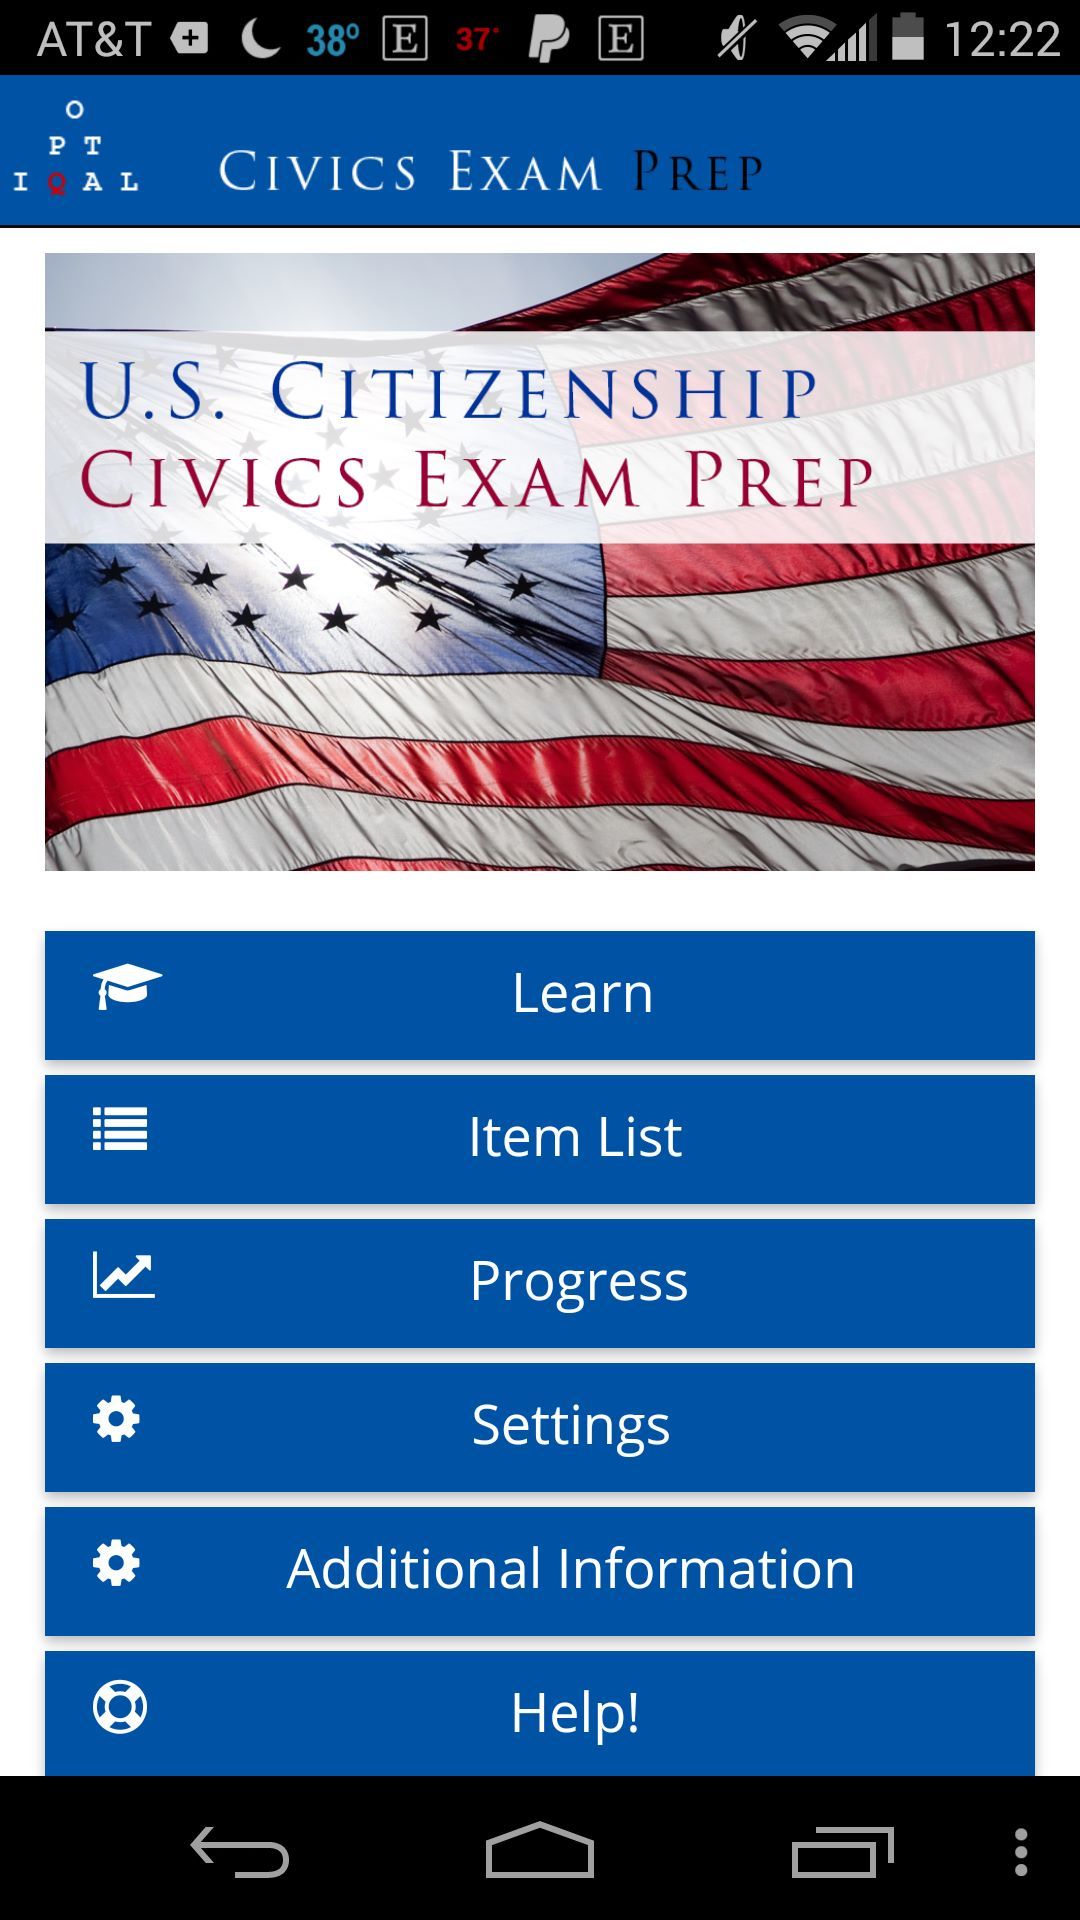 US Citizenship - Civics Exam Prep